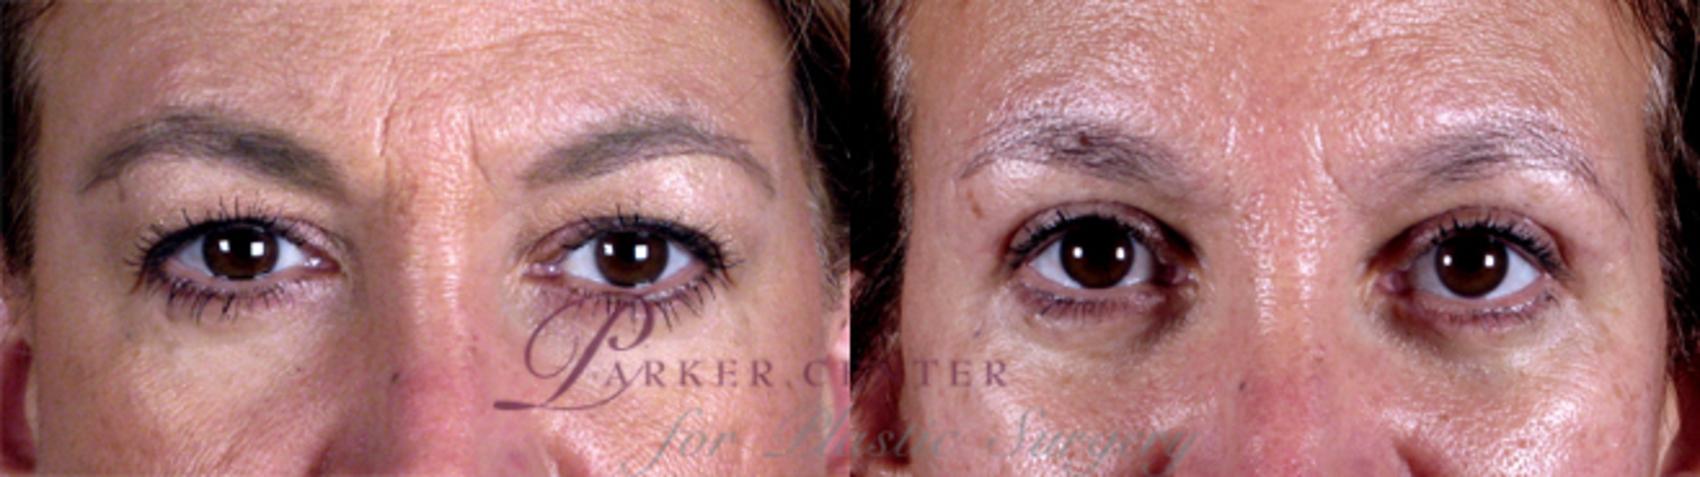 Eyelid Lift Case 11 Before & After View #3 | Paramus, NJ | Parker Center for Plastic Surgery